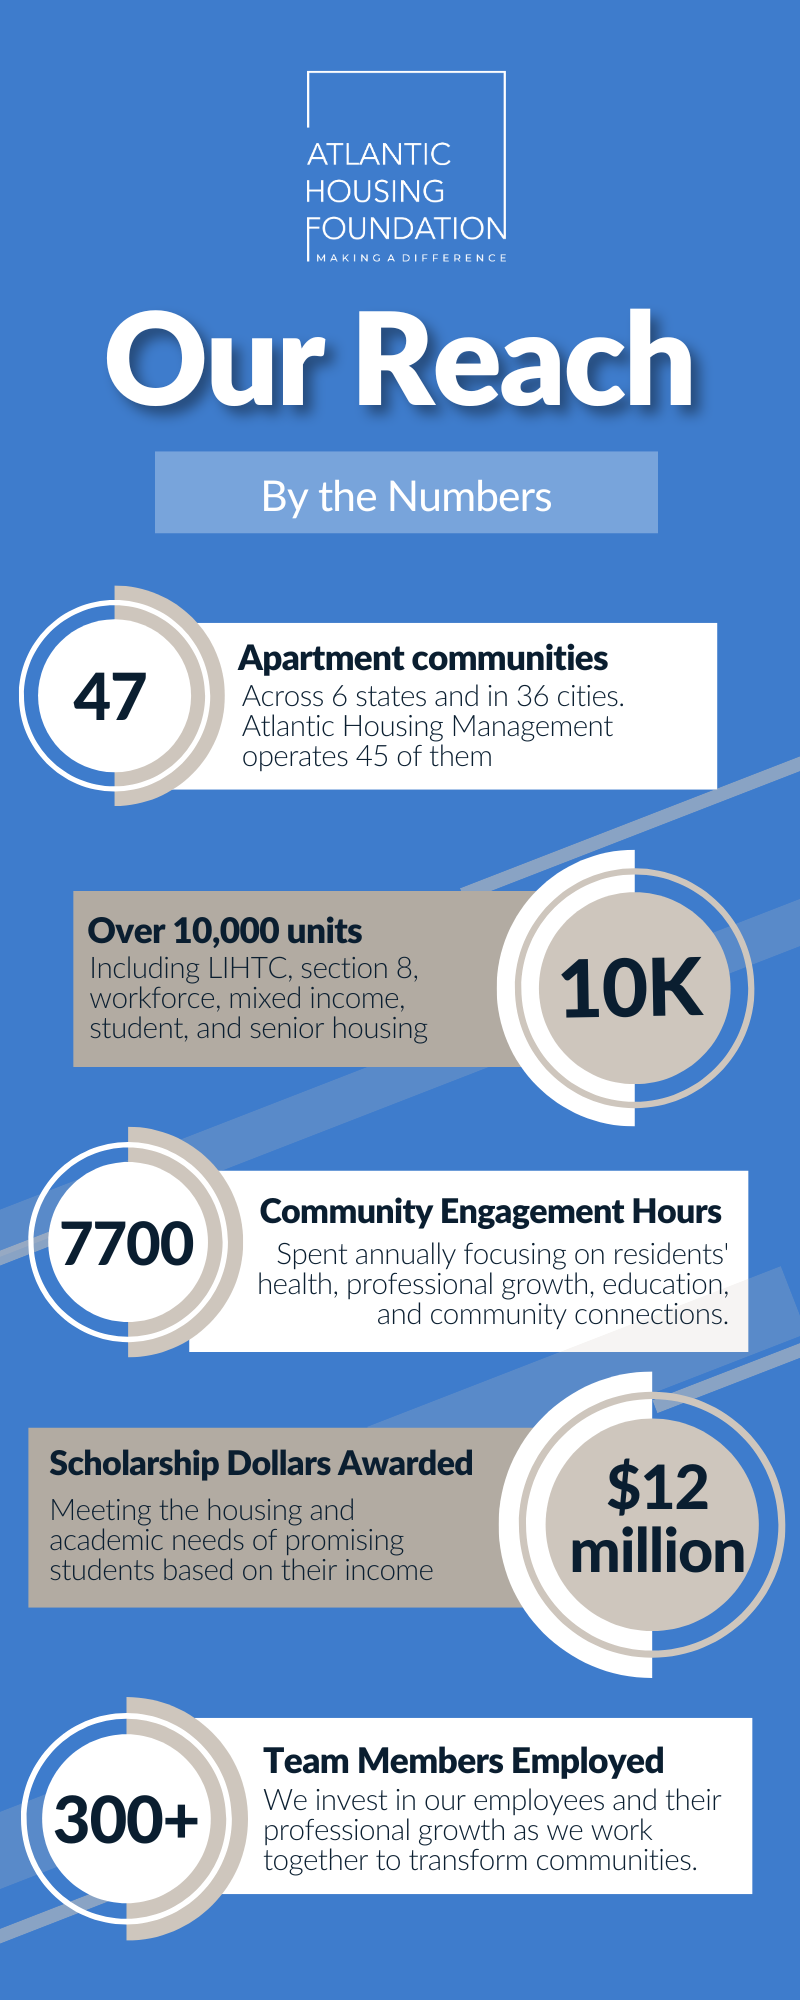 Atlantic Housing Foundation Summary Metrics Apartment Communities Service Hours Scholarships Employees